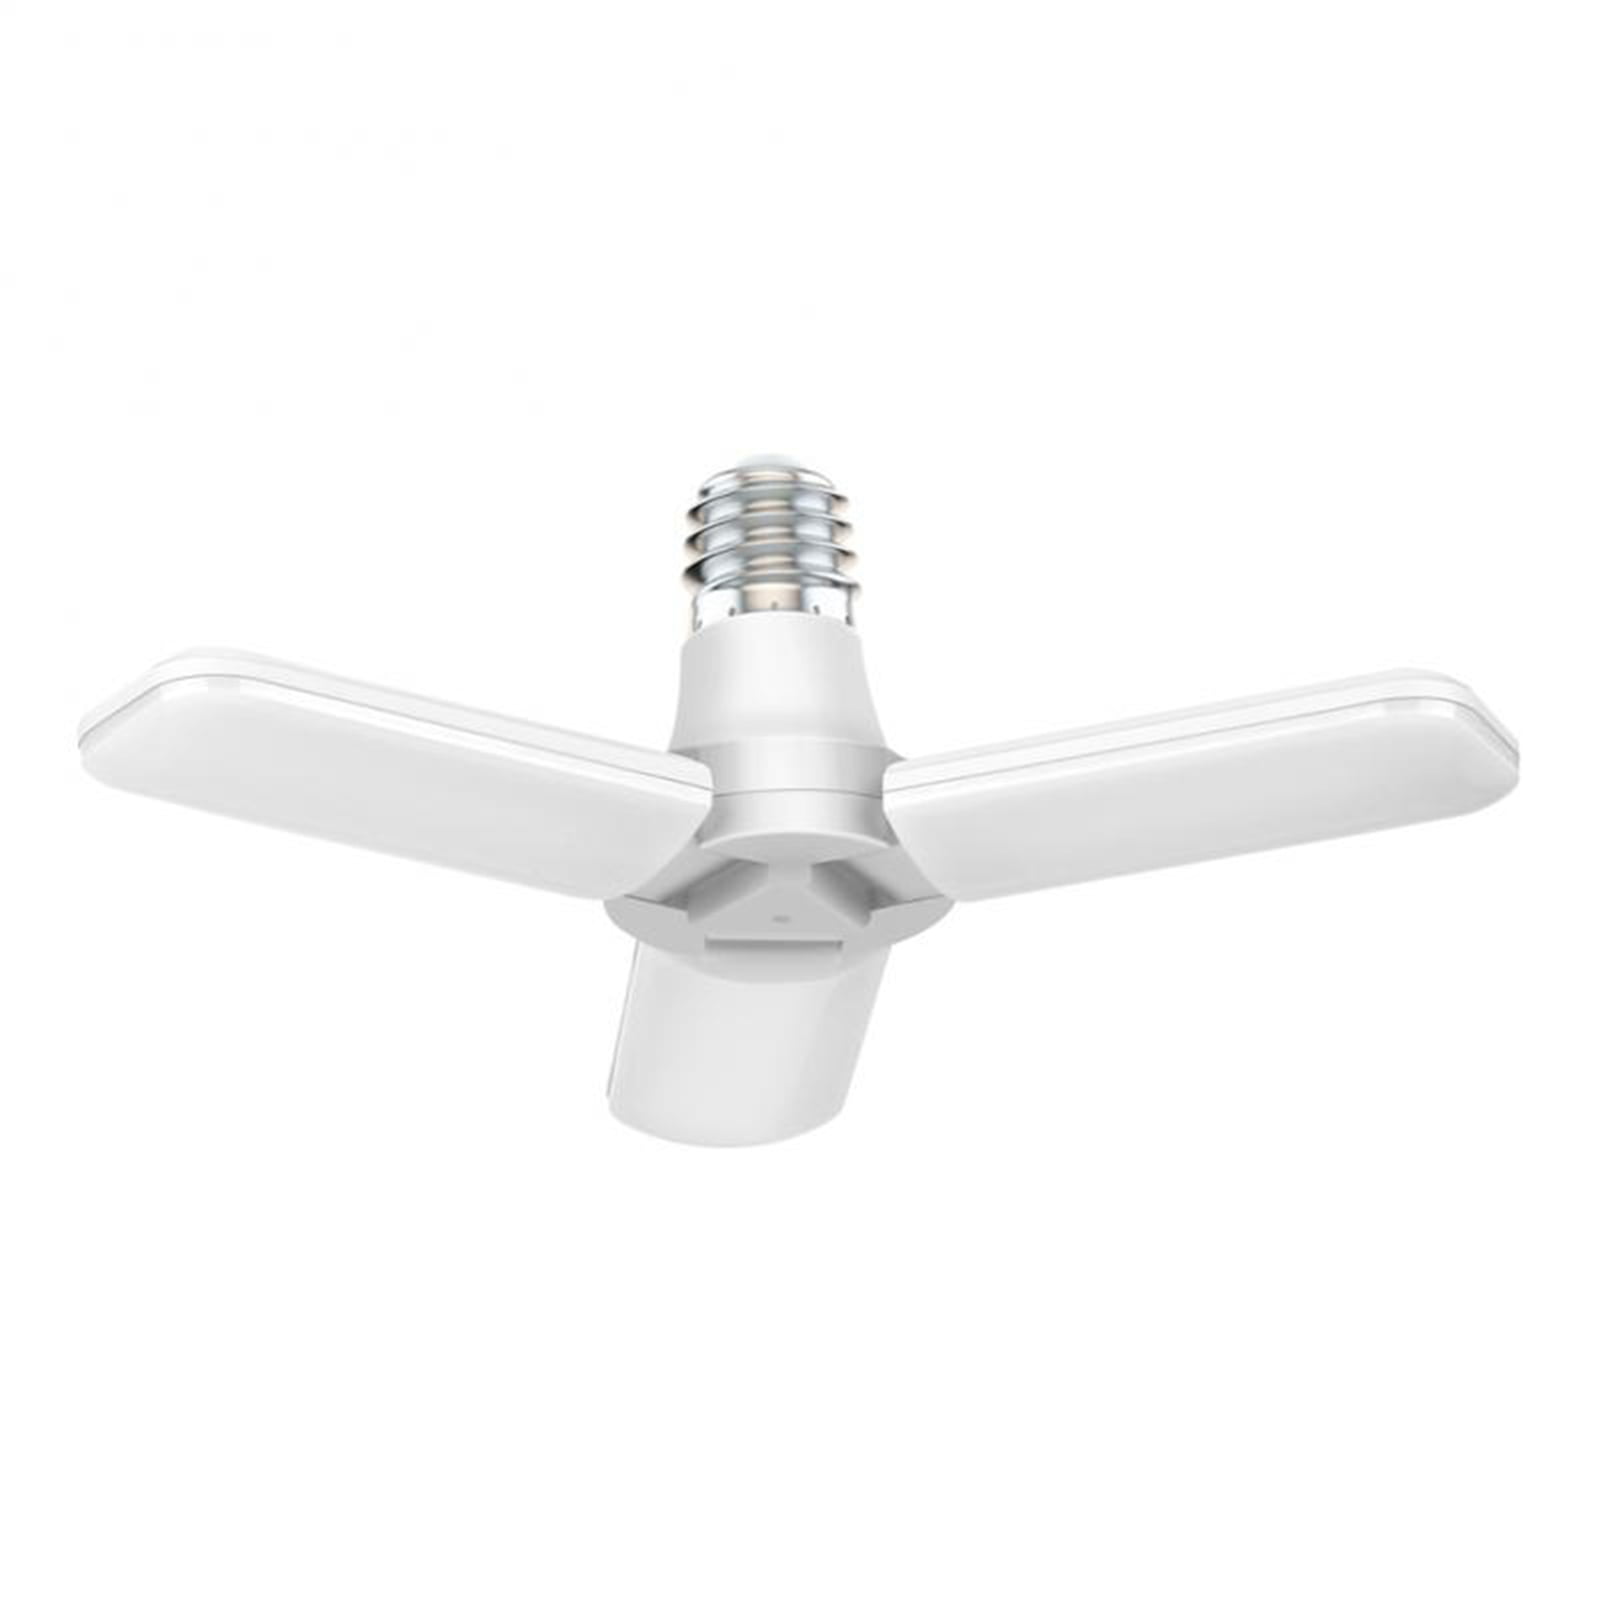 Foldable 246 LED Ceiling Fan Light E27 White Lamp Angle Adjustable Energy Saving 